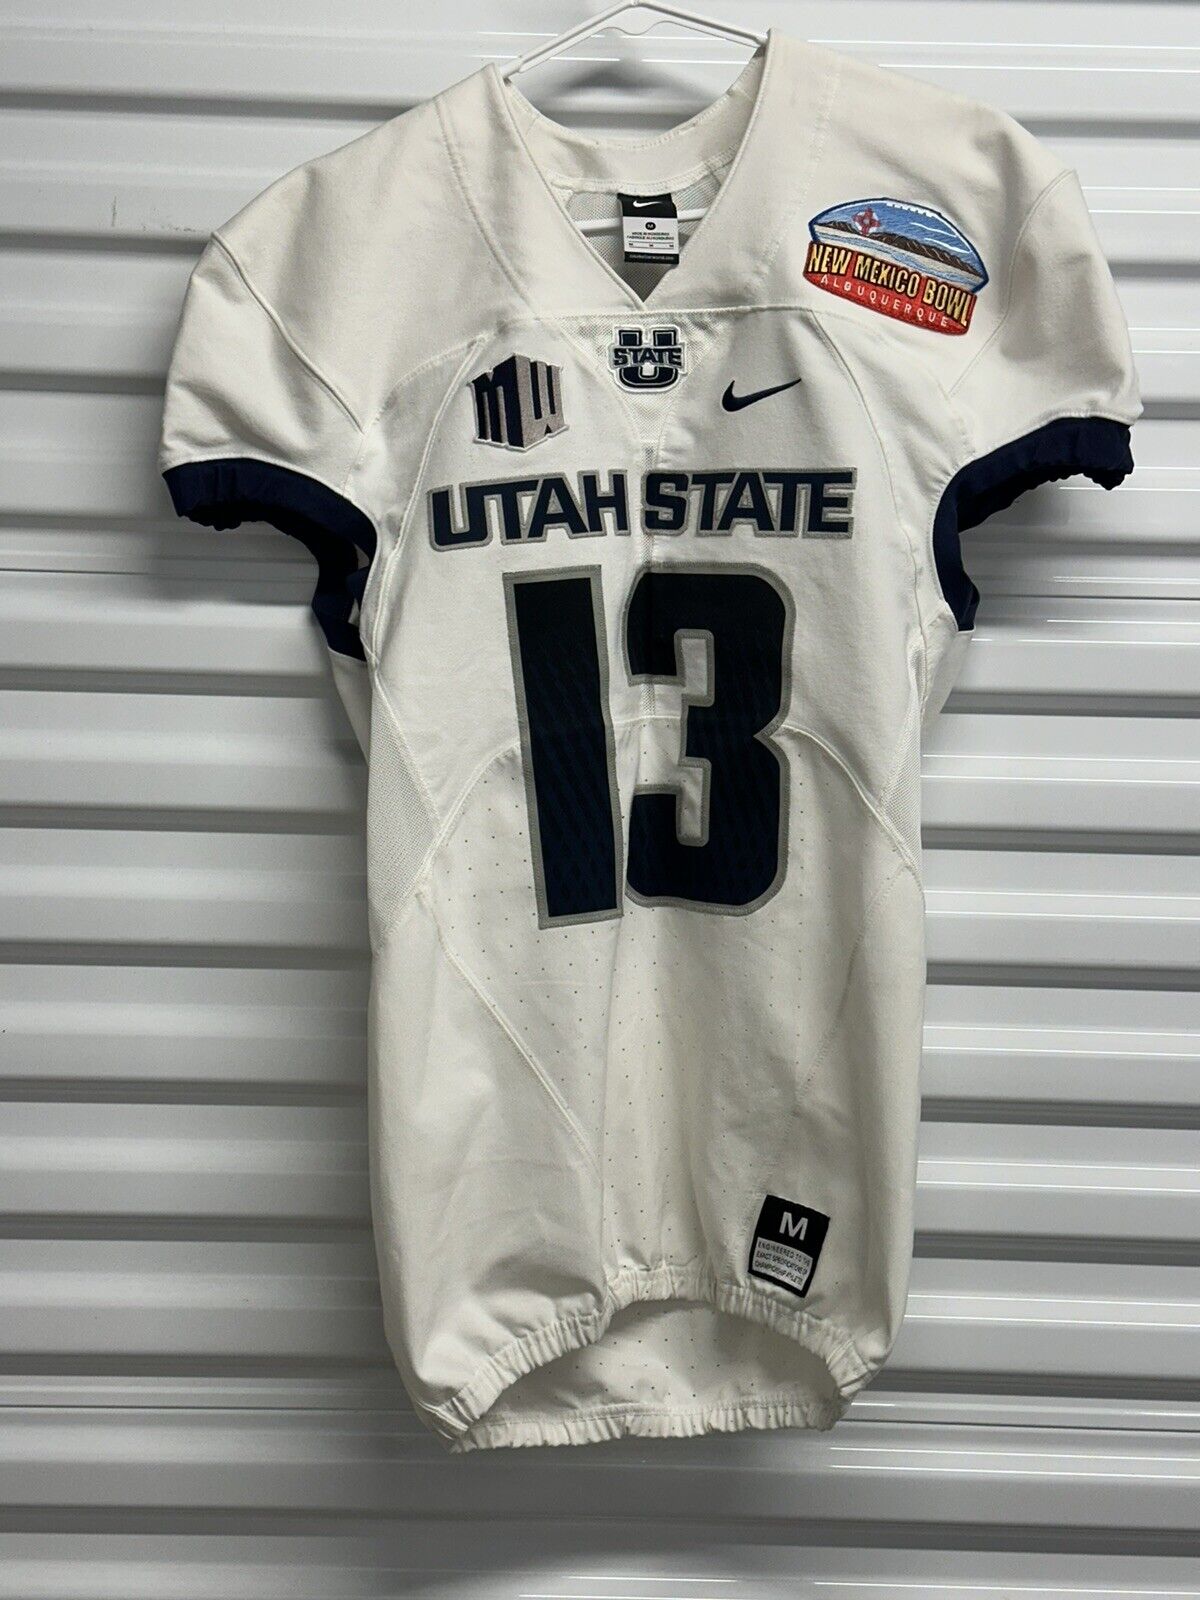 VTG Utah State #13 Replica Football JerseyCollege Nayy - MEDIUM